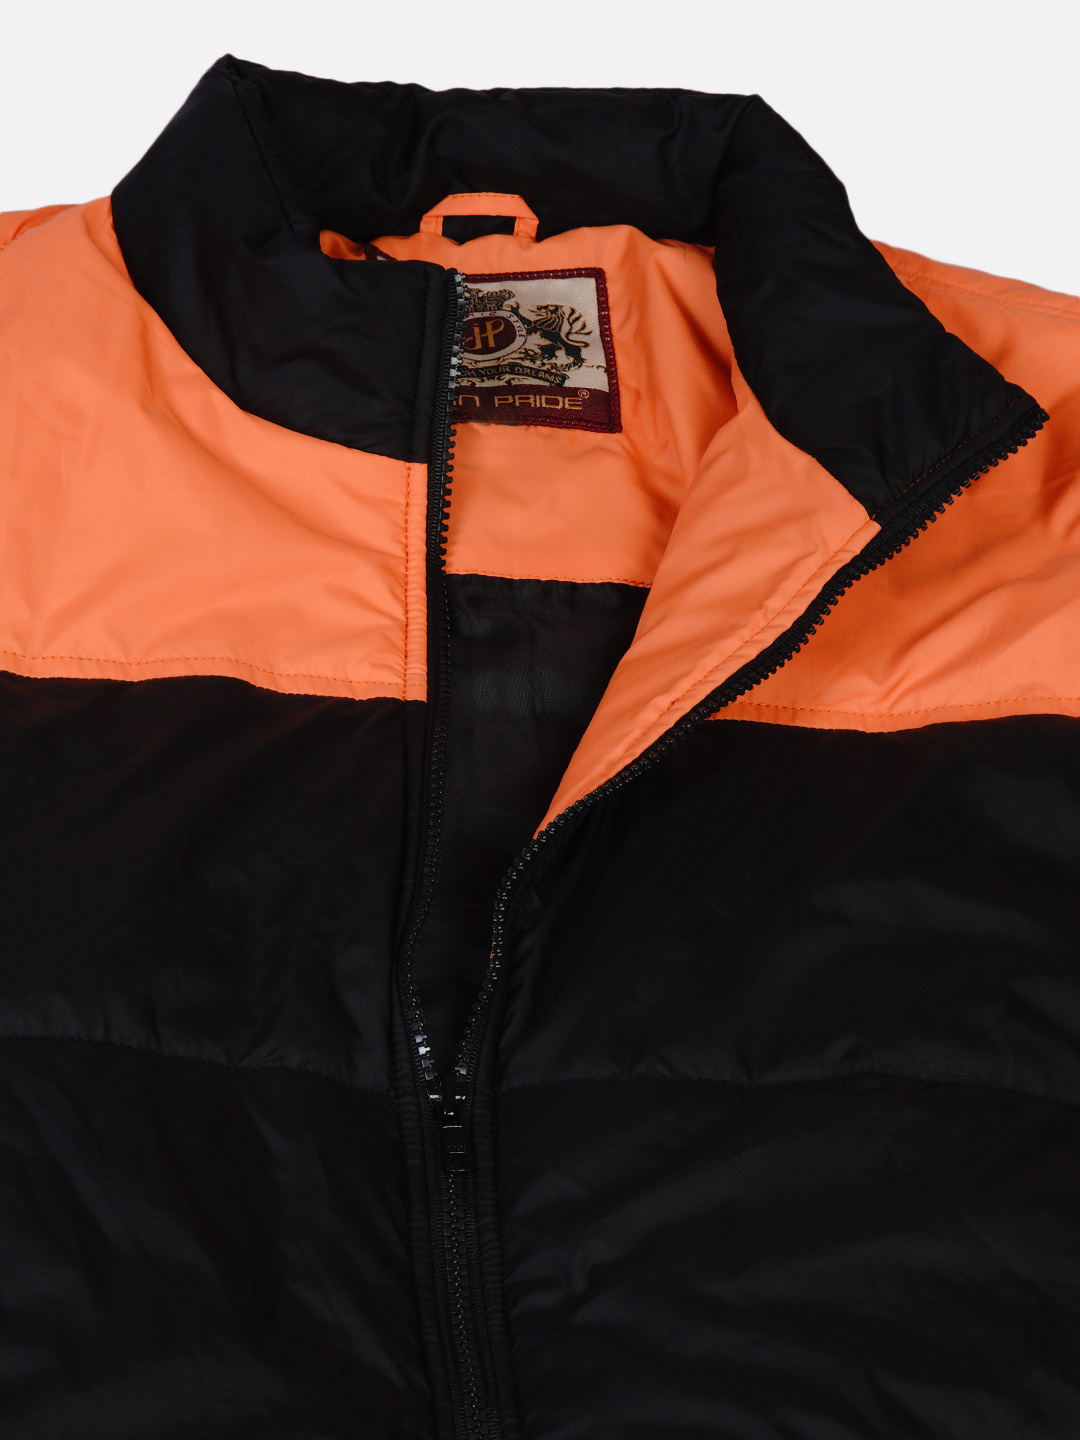 winterwear/jackets/JPJKT73005B/jpjkt73005b-2.jpg